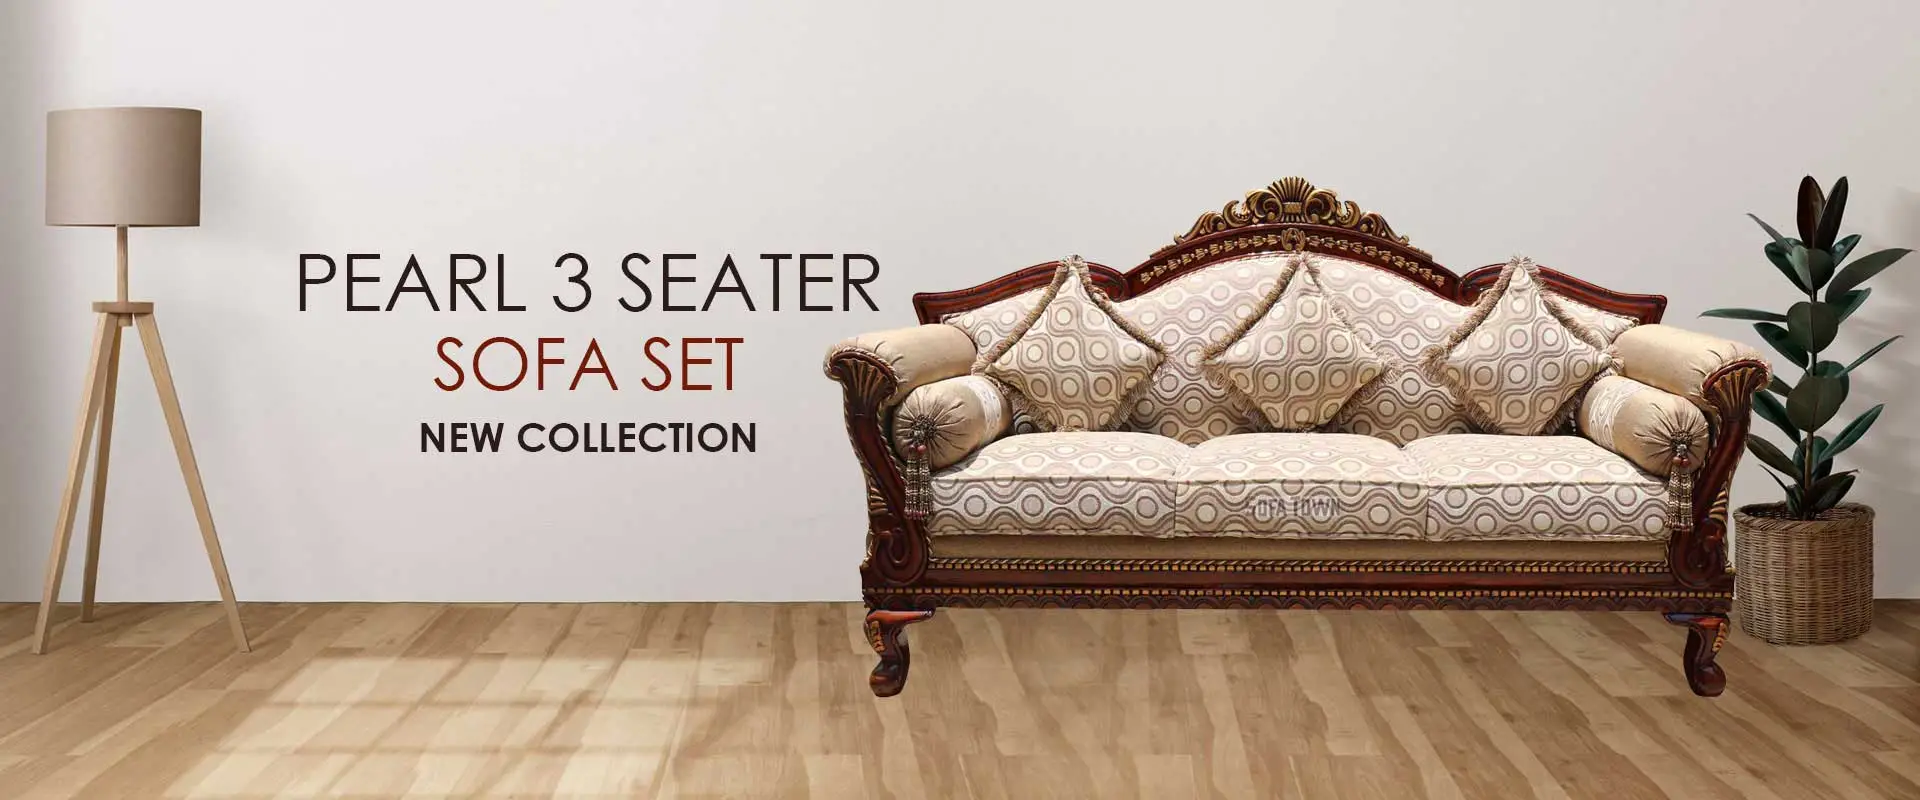 Pearl 3 Seater Sofa Set  Manufacturers in Chandauli